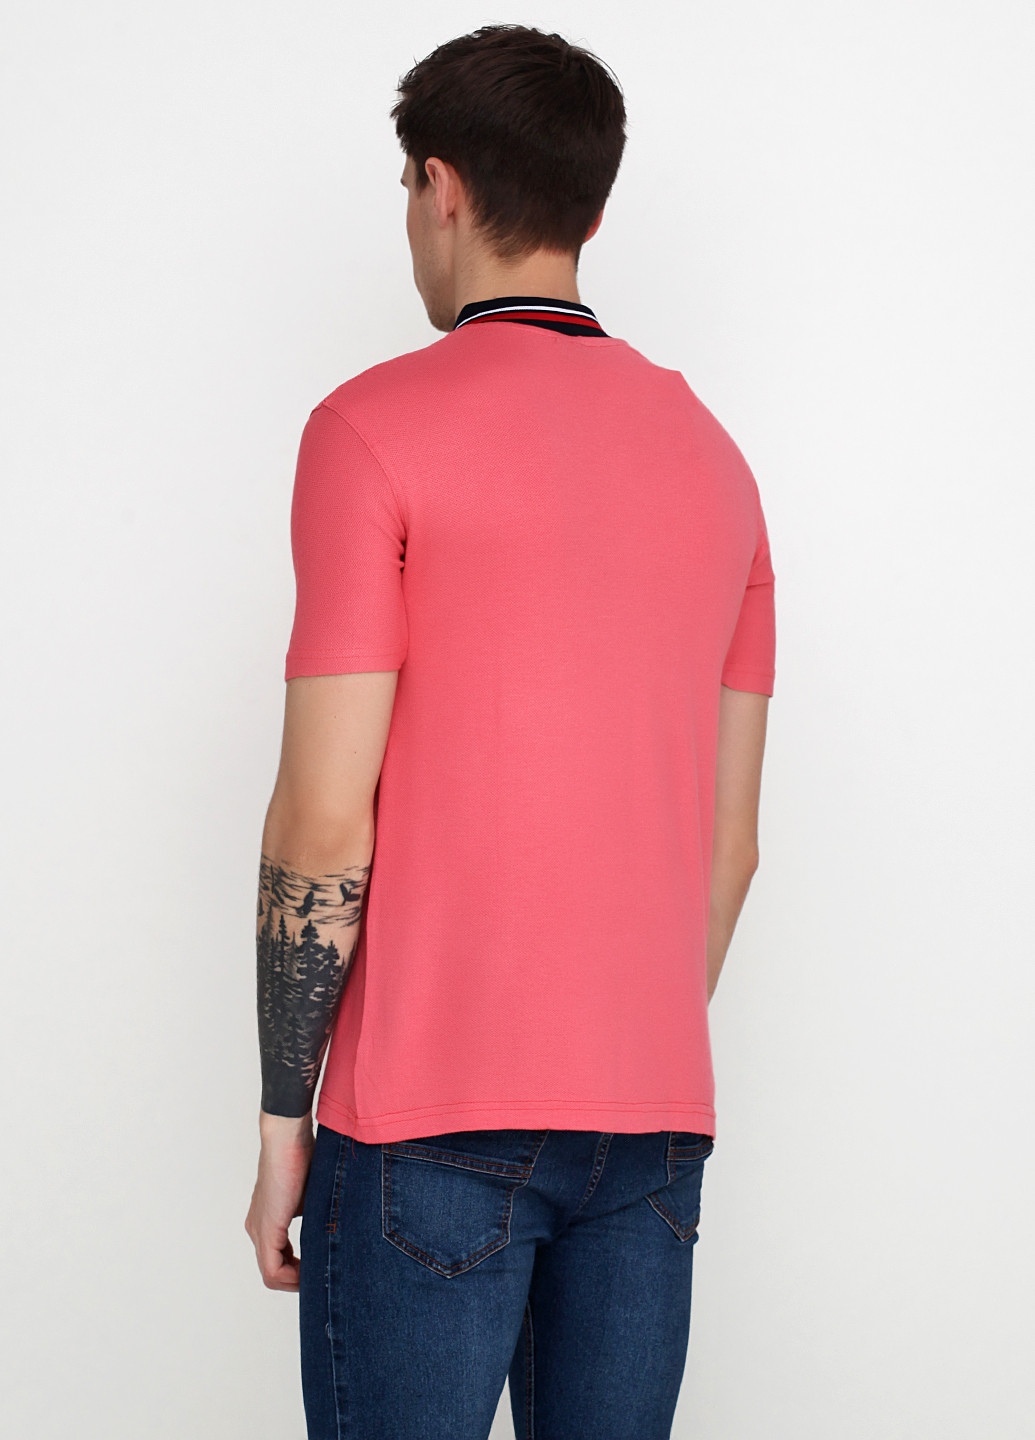 Розовая футболка-поло для мужчин West Wint с орнаментом